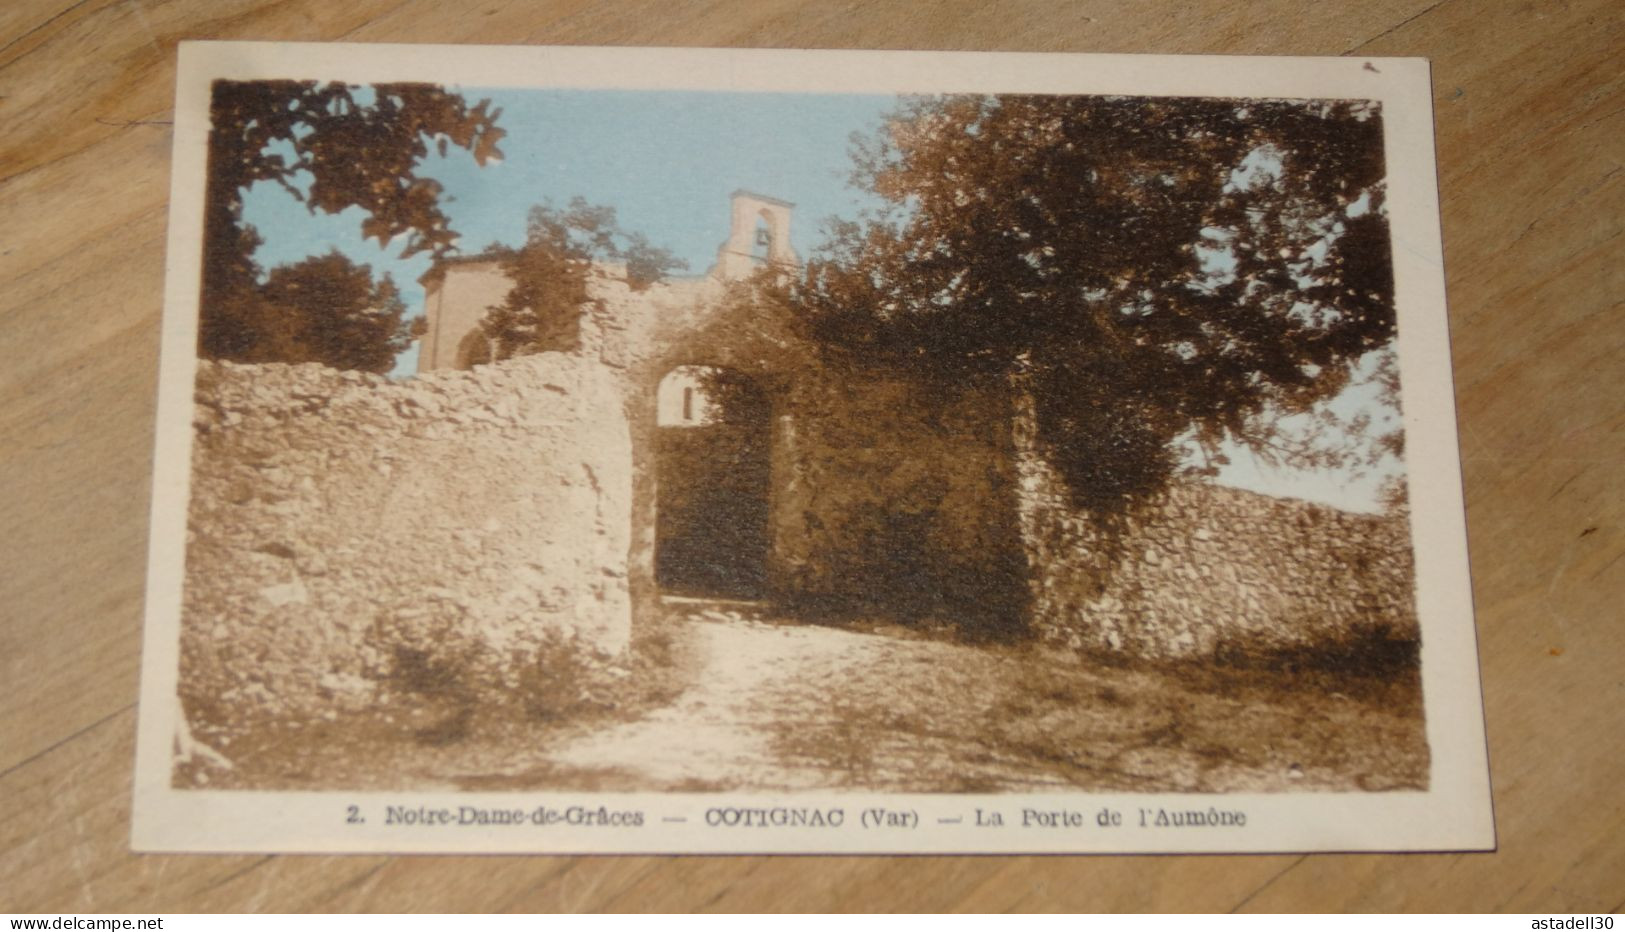 COTIGNAC : La Porte De L'aumone ........... AZ-16906 - Cotignac